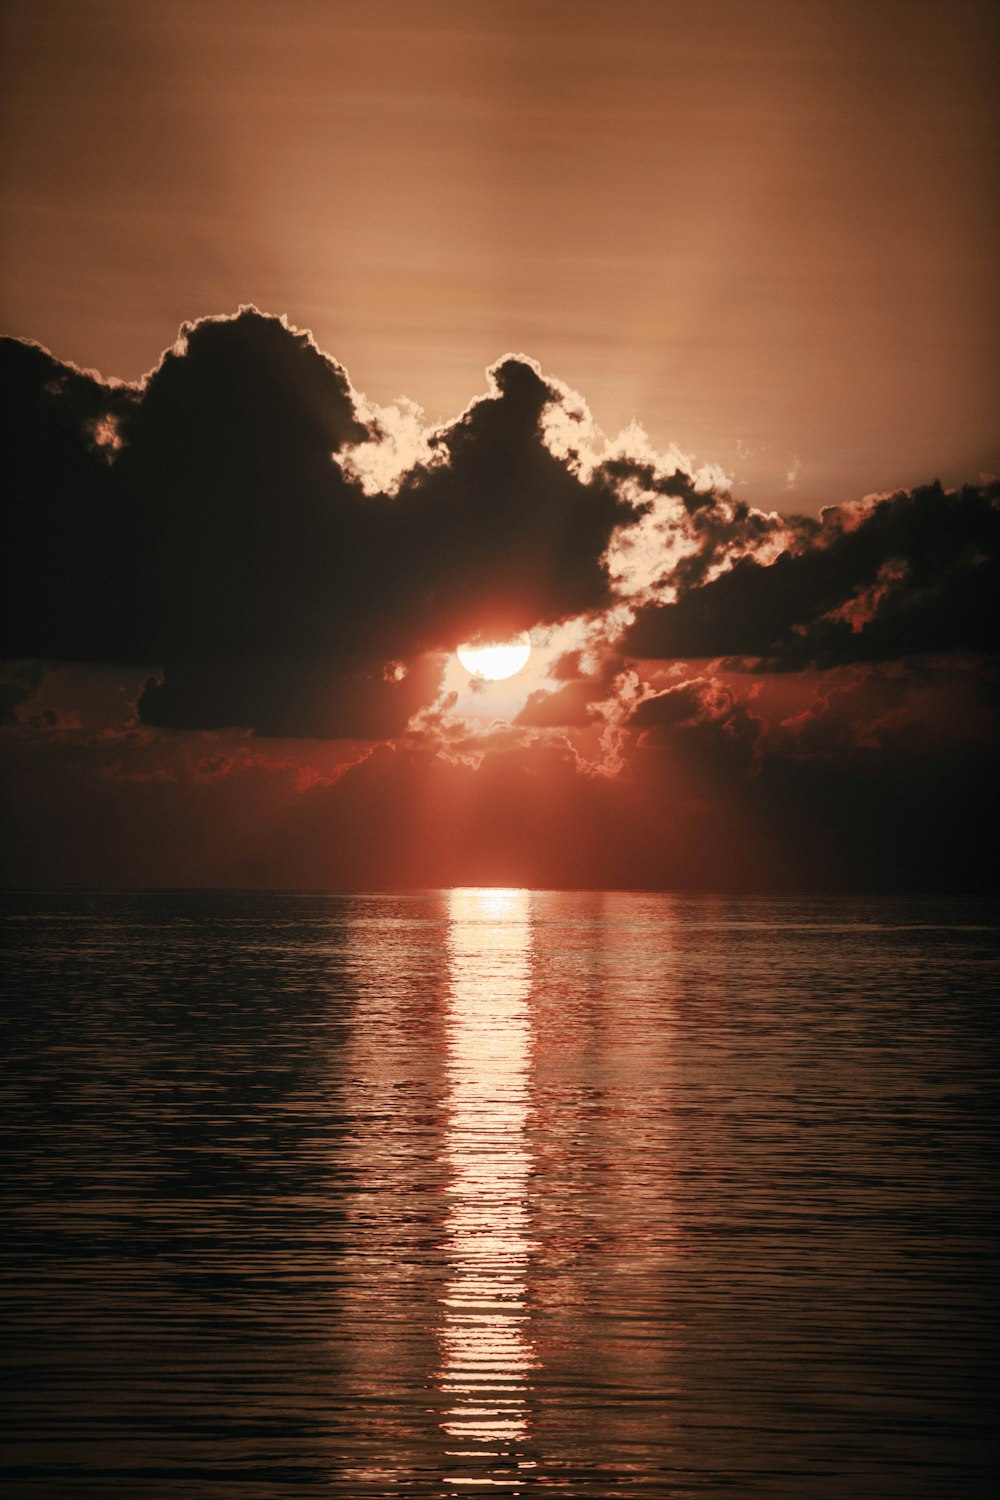 orange setting sun behind black clouds over the sea